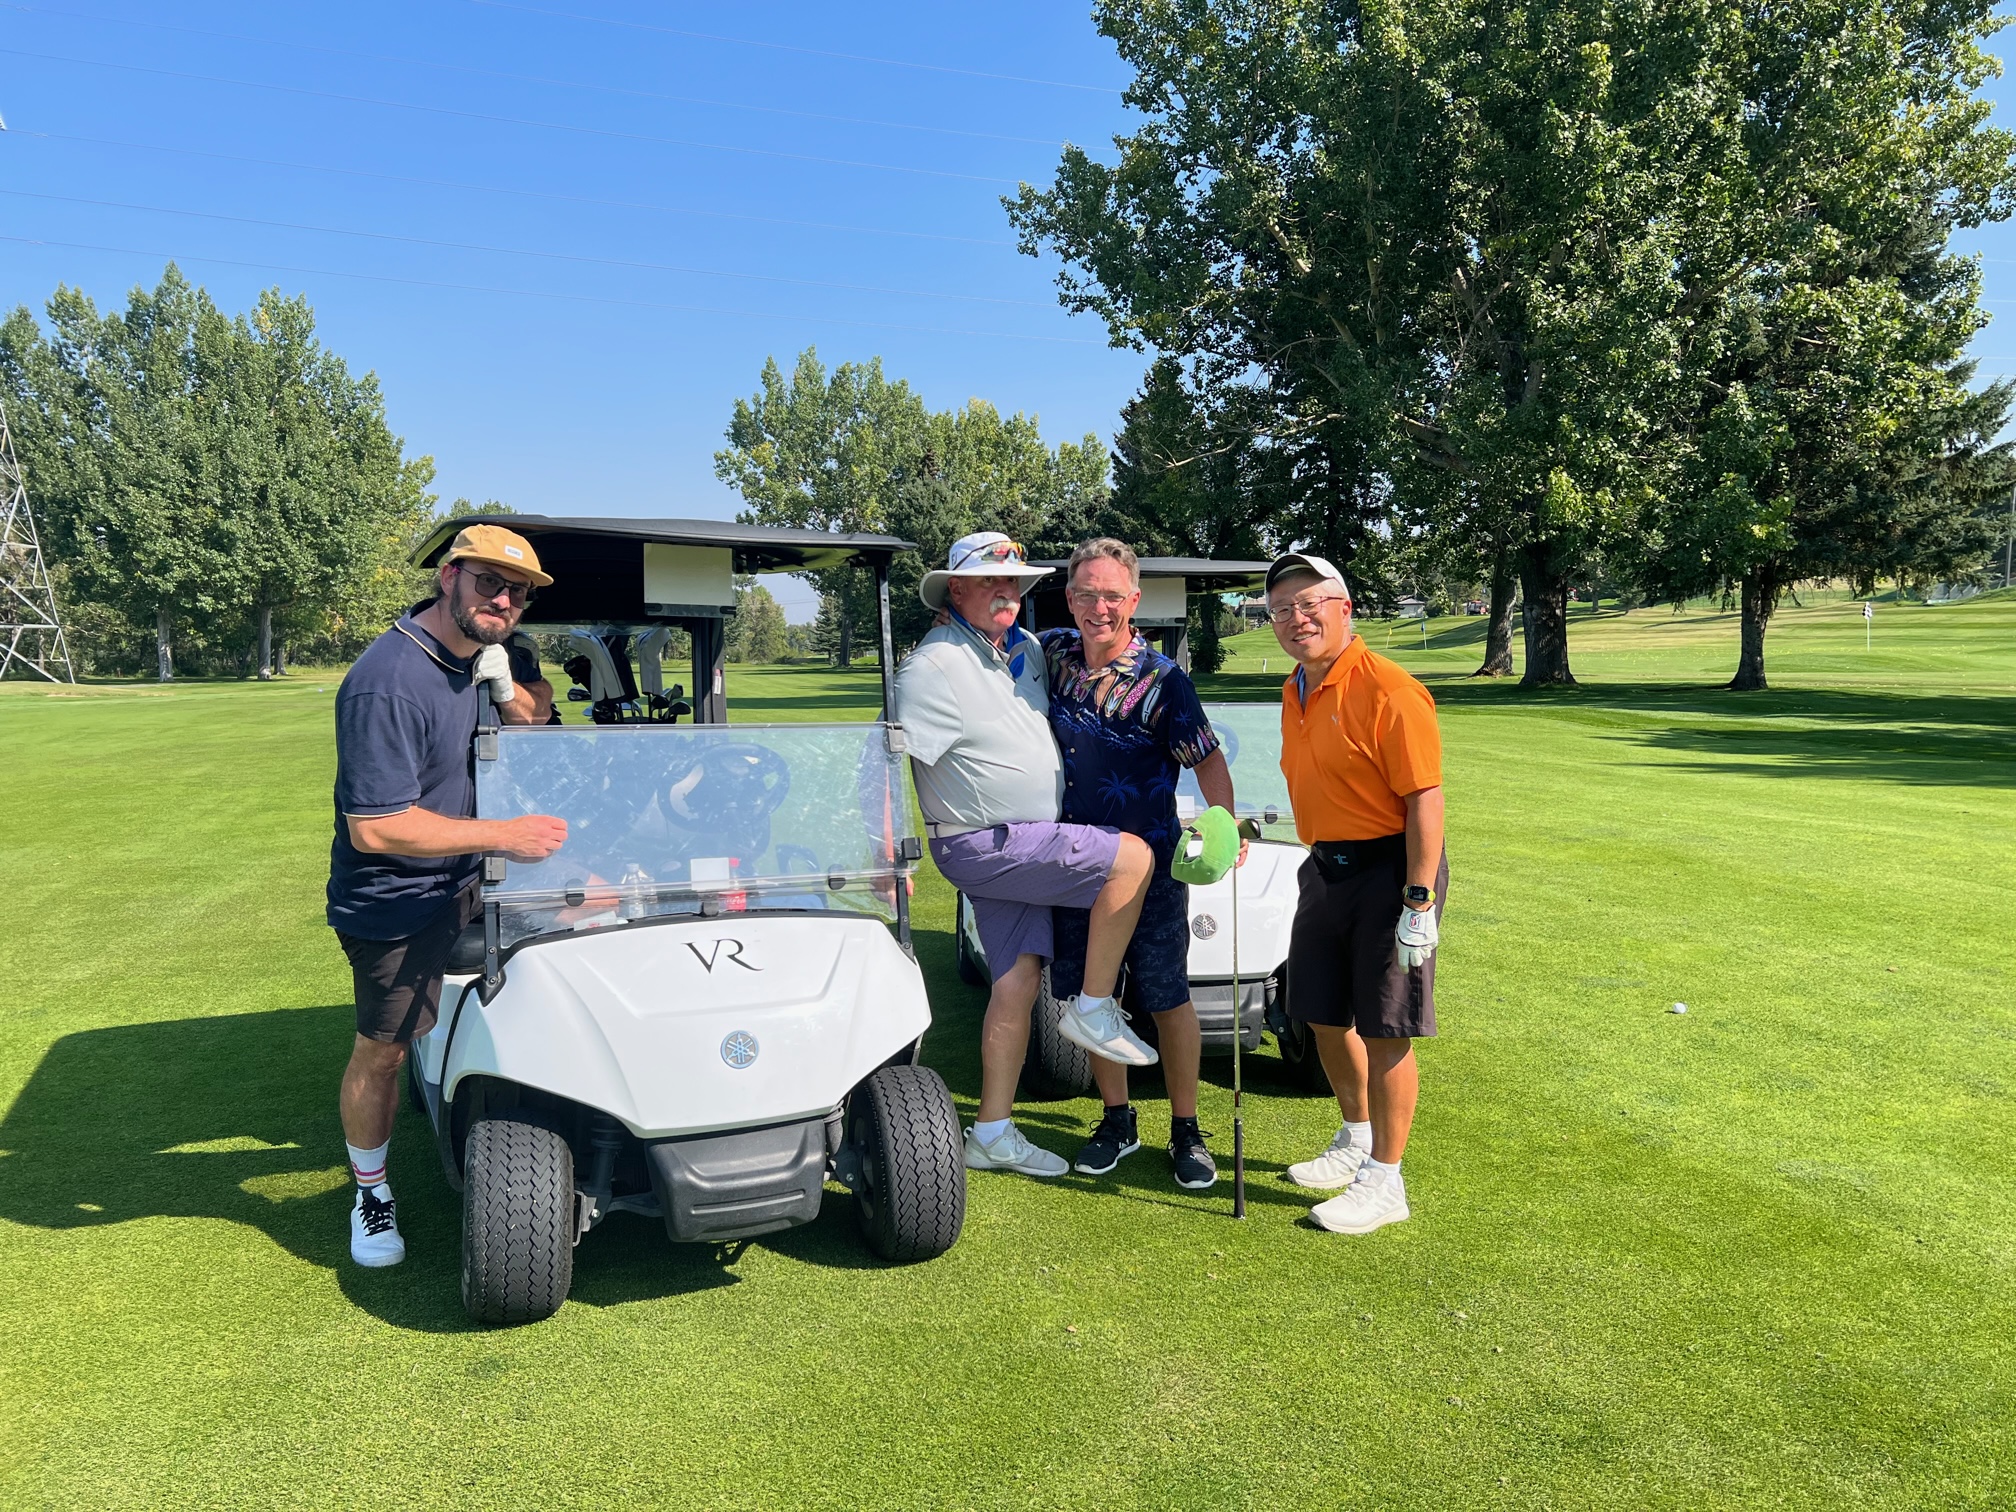 Brent, Bill, Jordan & Terry golf pic